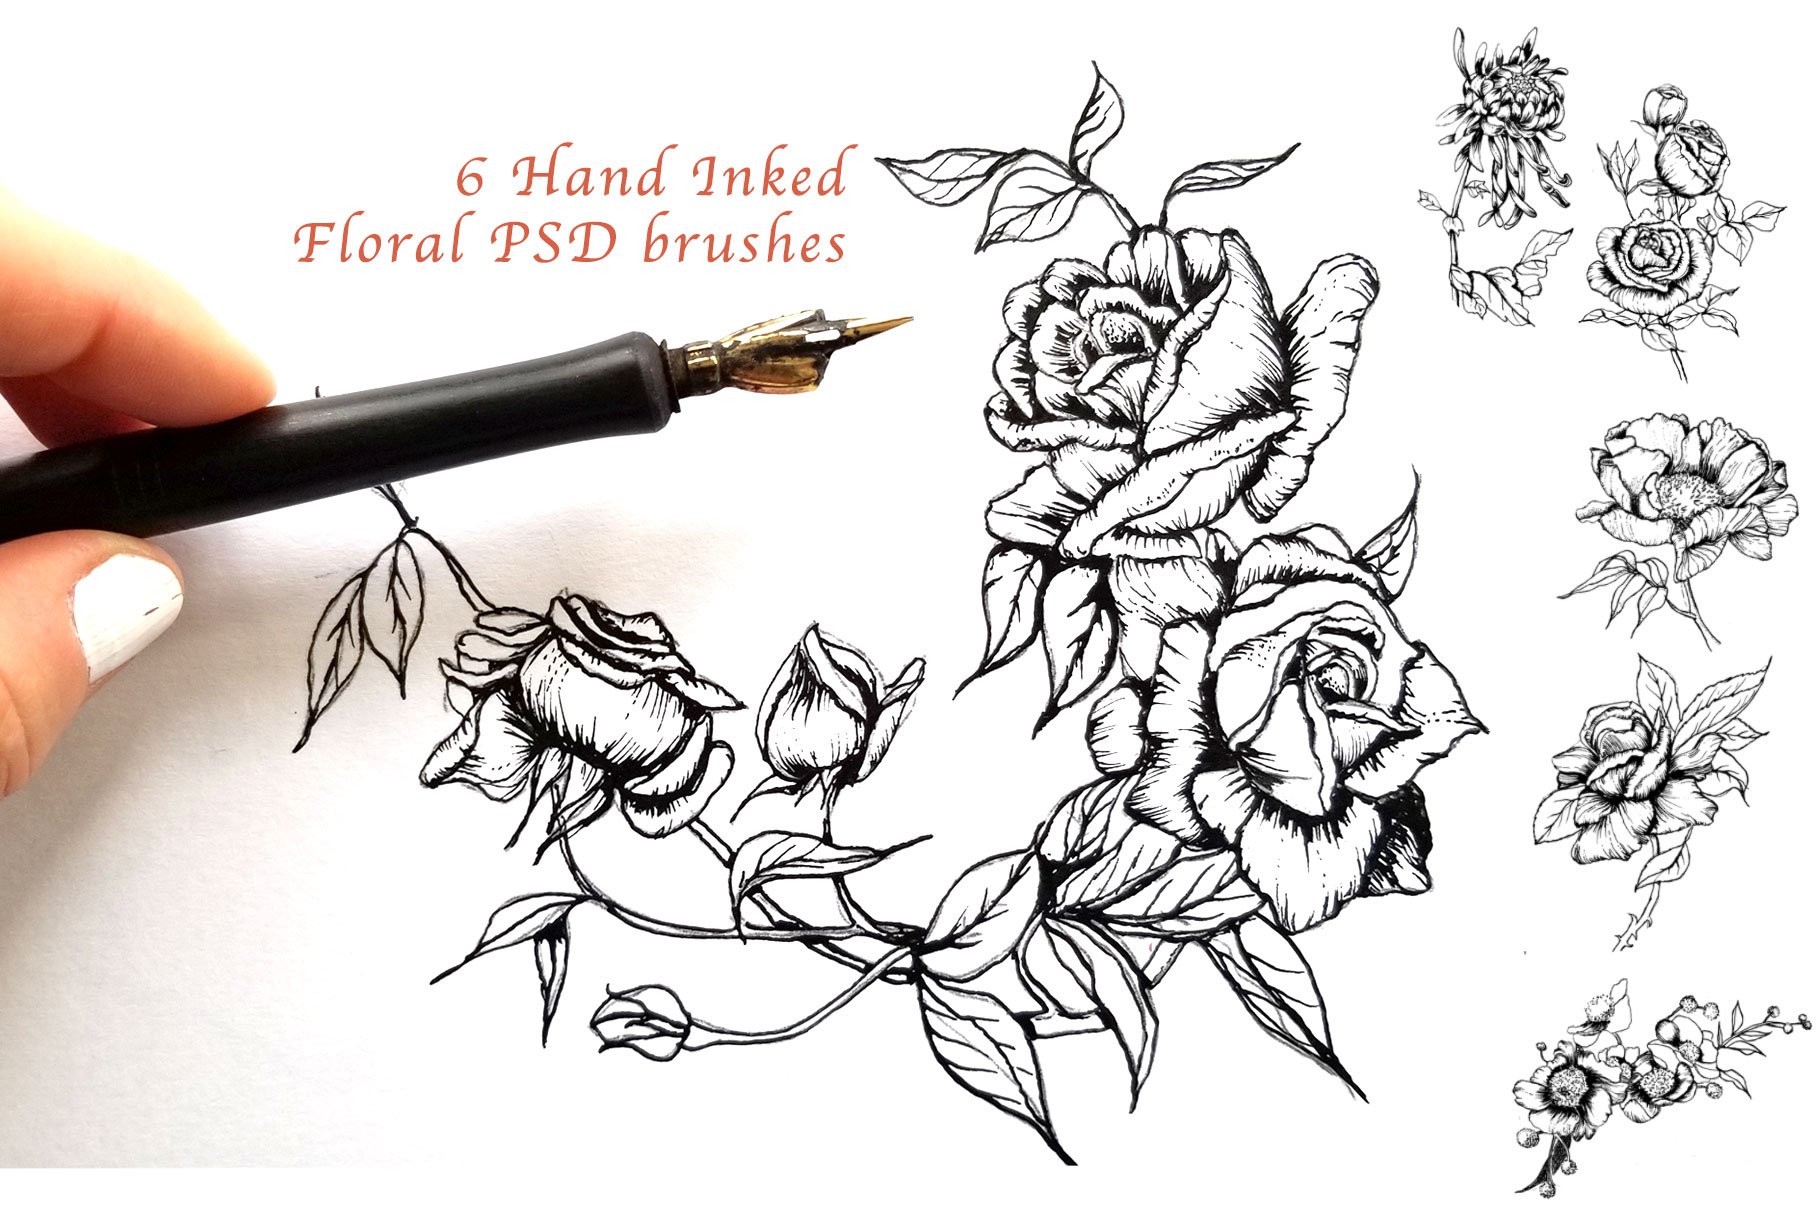 6 Hand Inked Floral PSD Brushescover image.